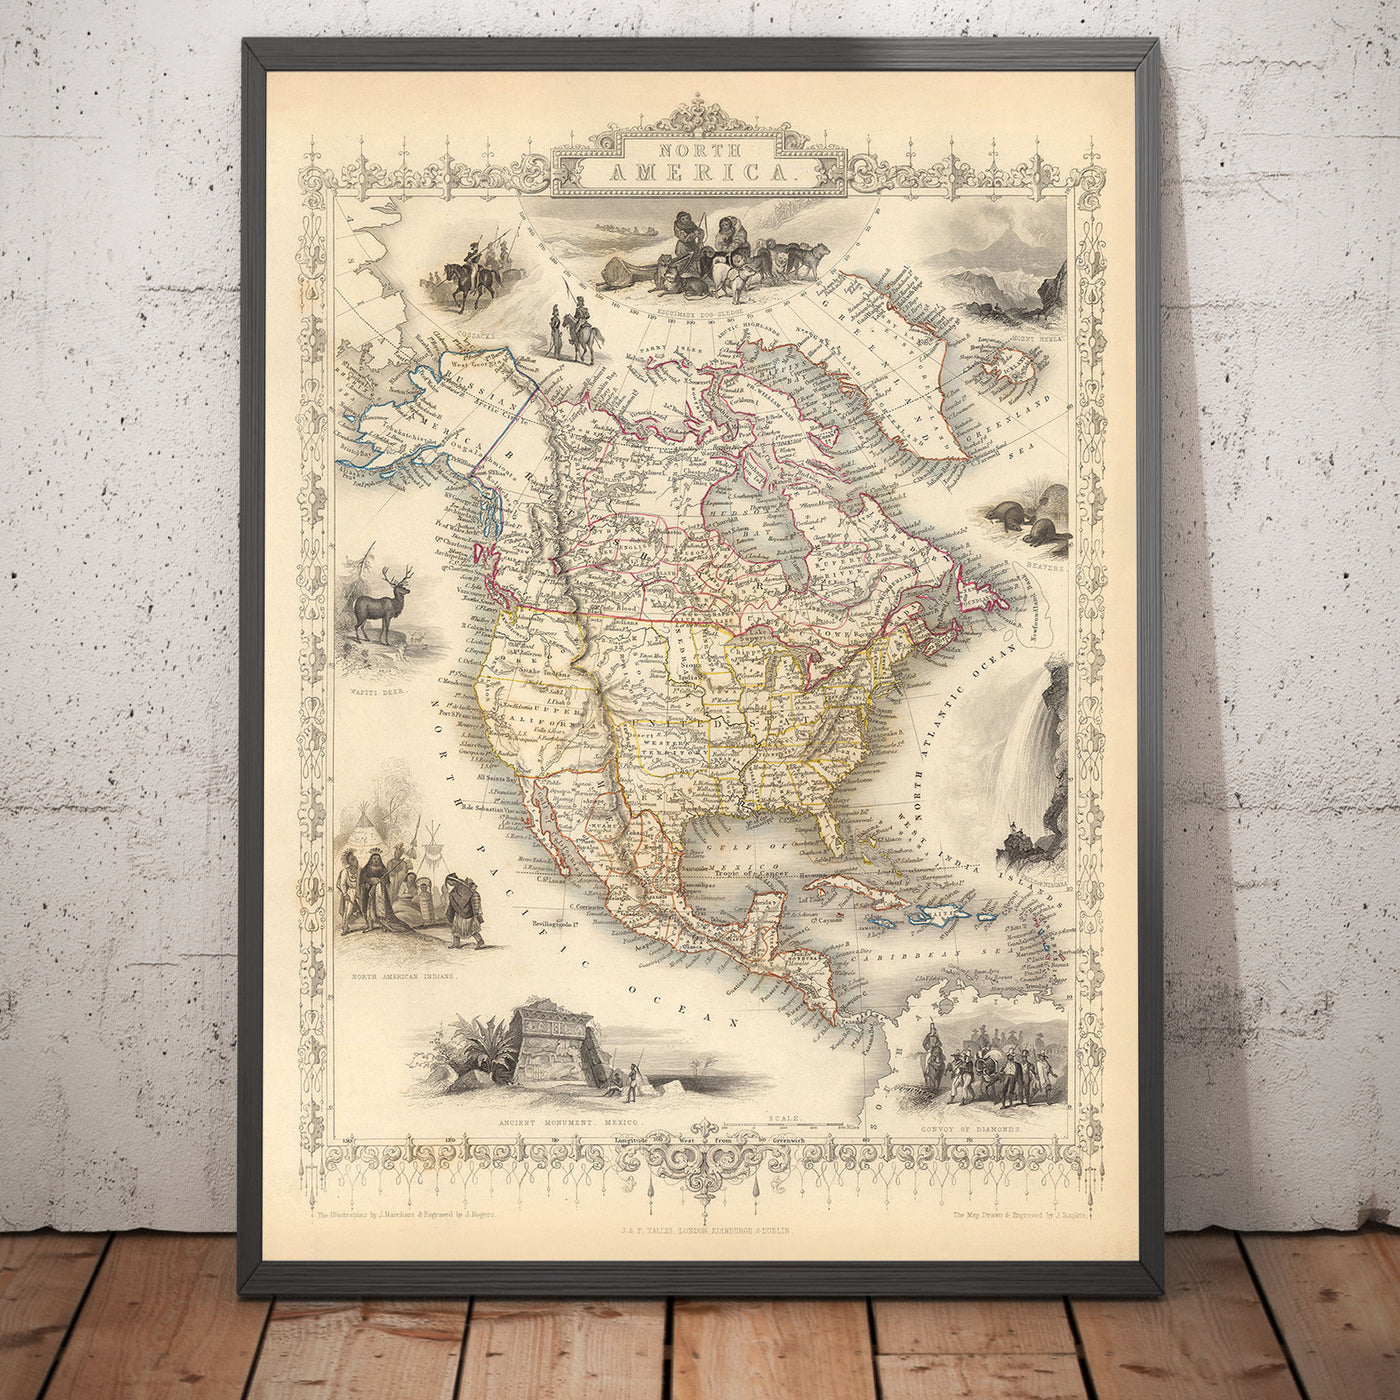 Old Map of North America, 1851 by Tallis & Rapkin - Illustrated USA, Canada, Mexico, Eskimos, Beavers, Natives